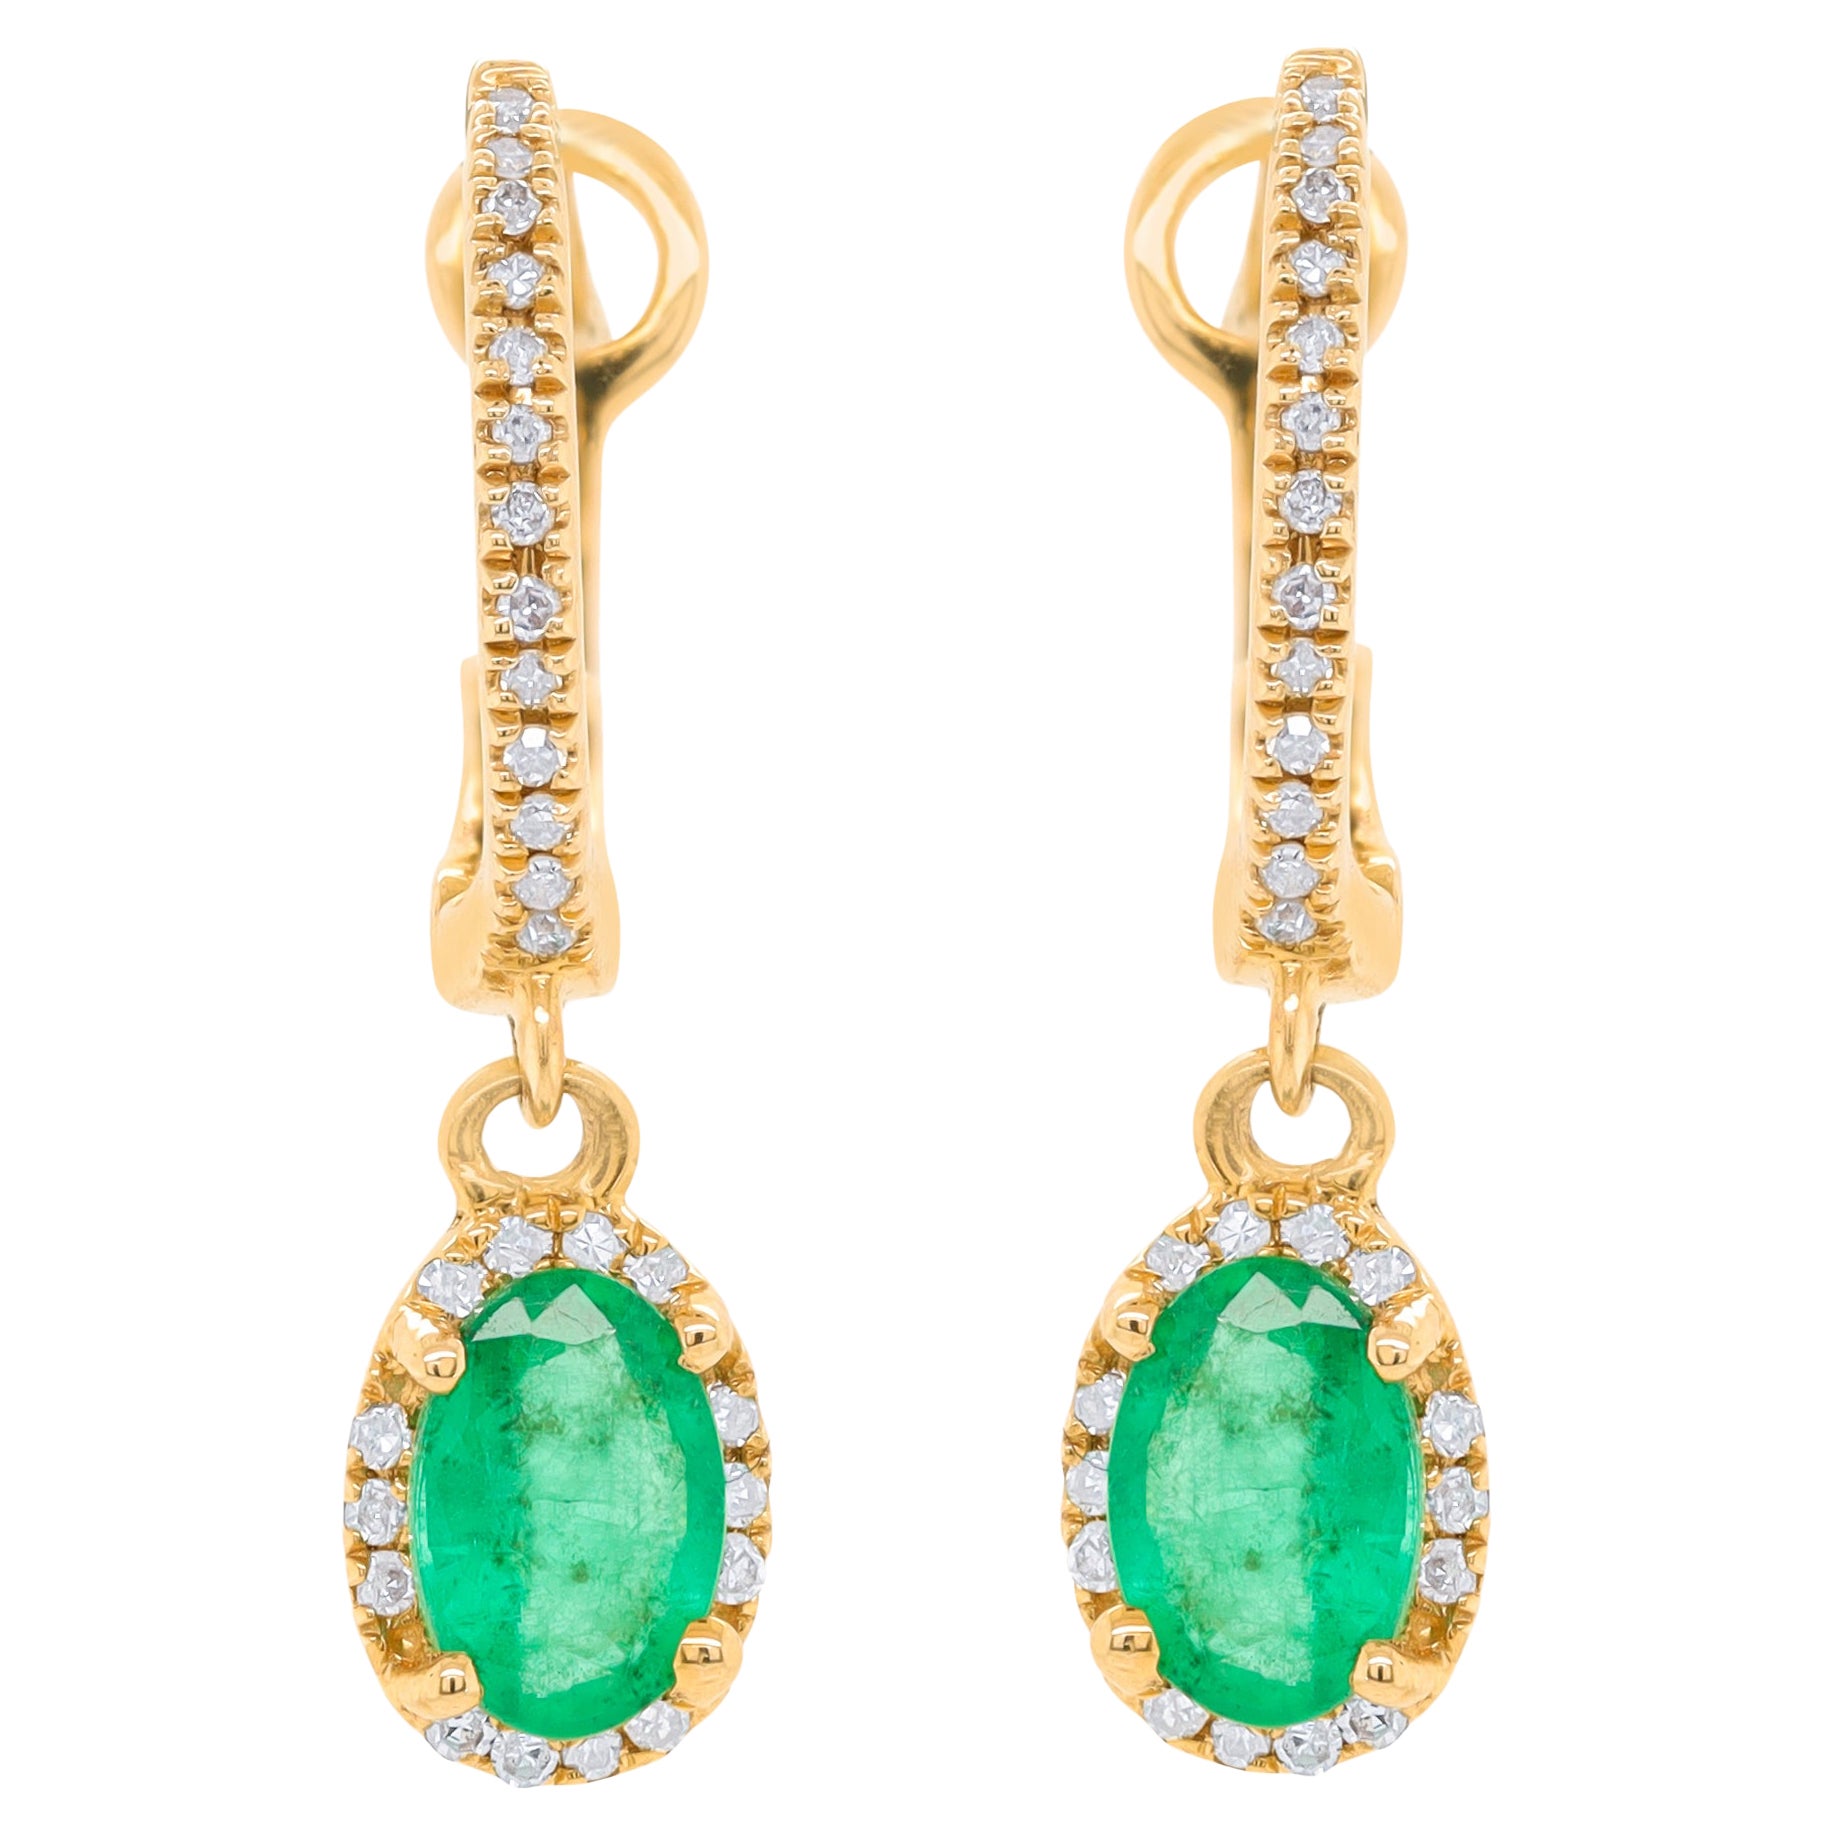 14K Yellow Gold Emerald and Diamond Earrings 